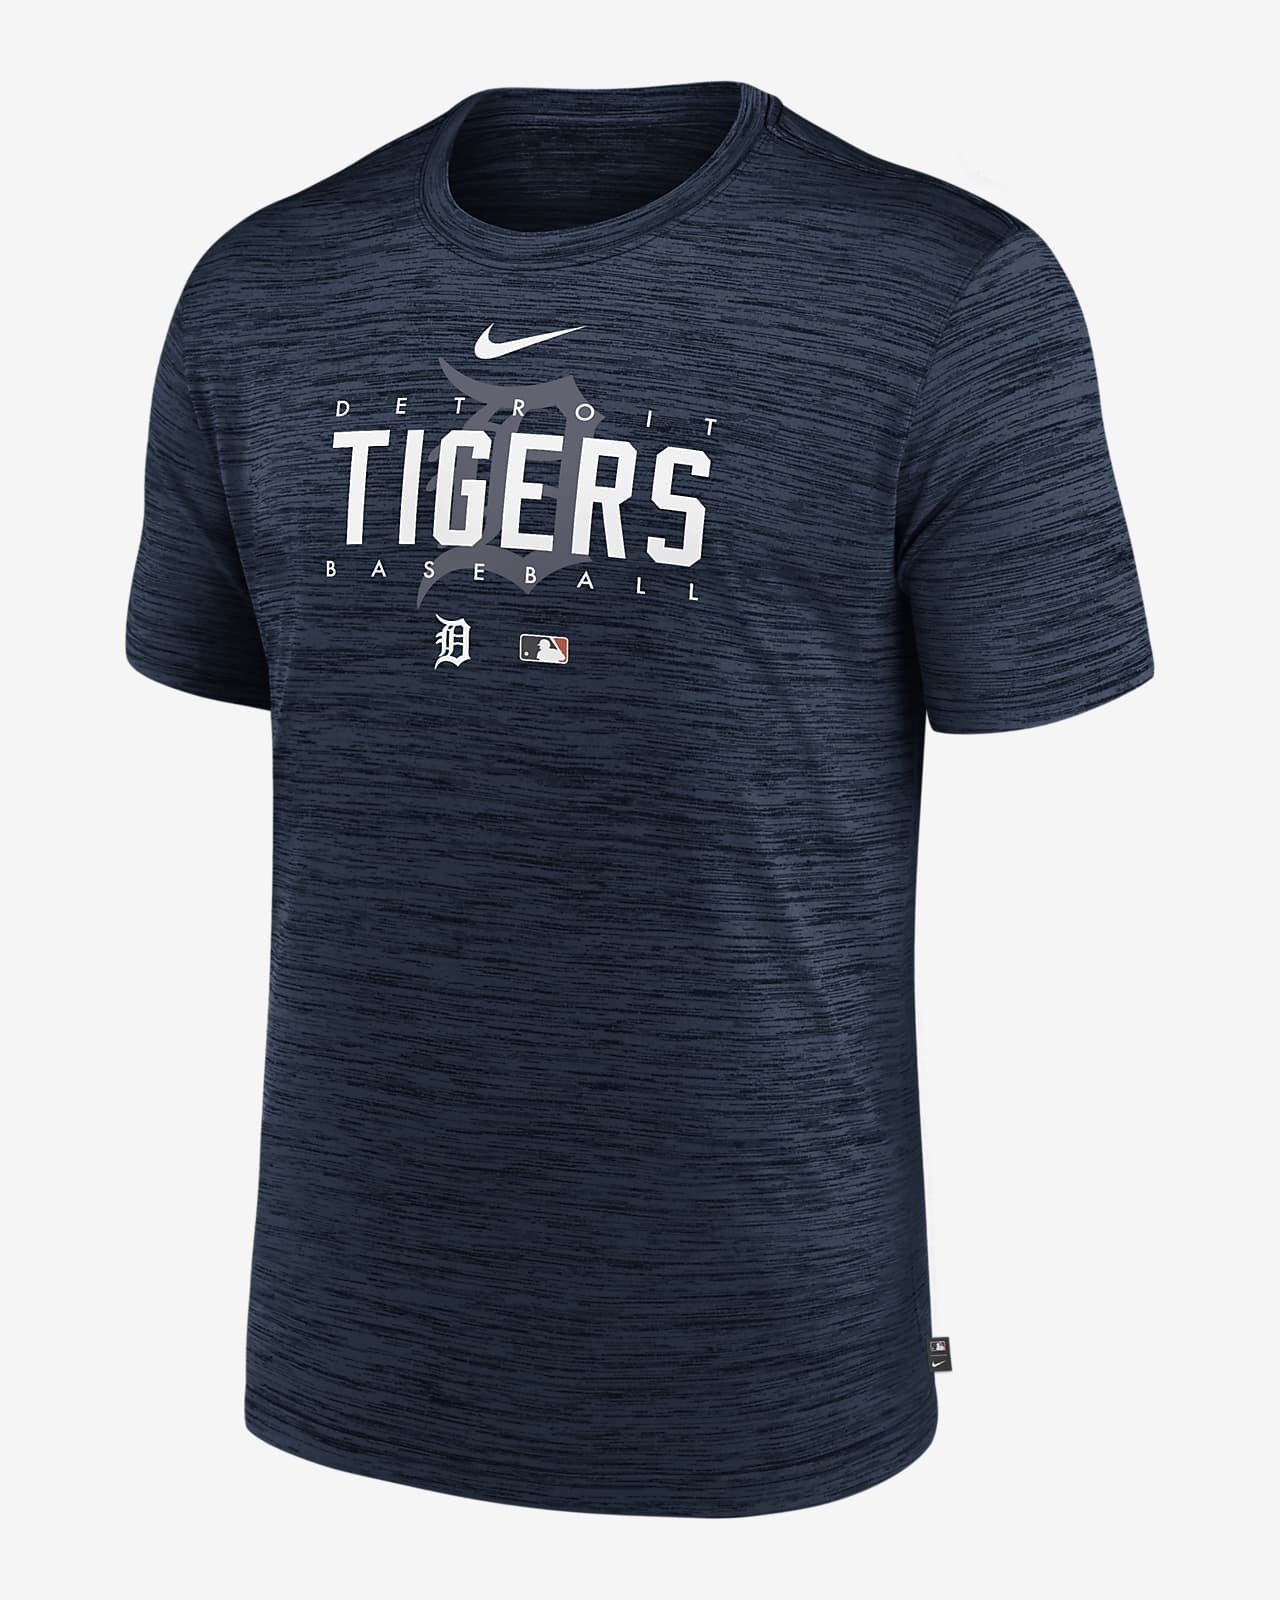 detroit tiger shirts on sale